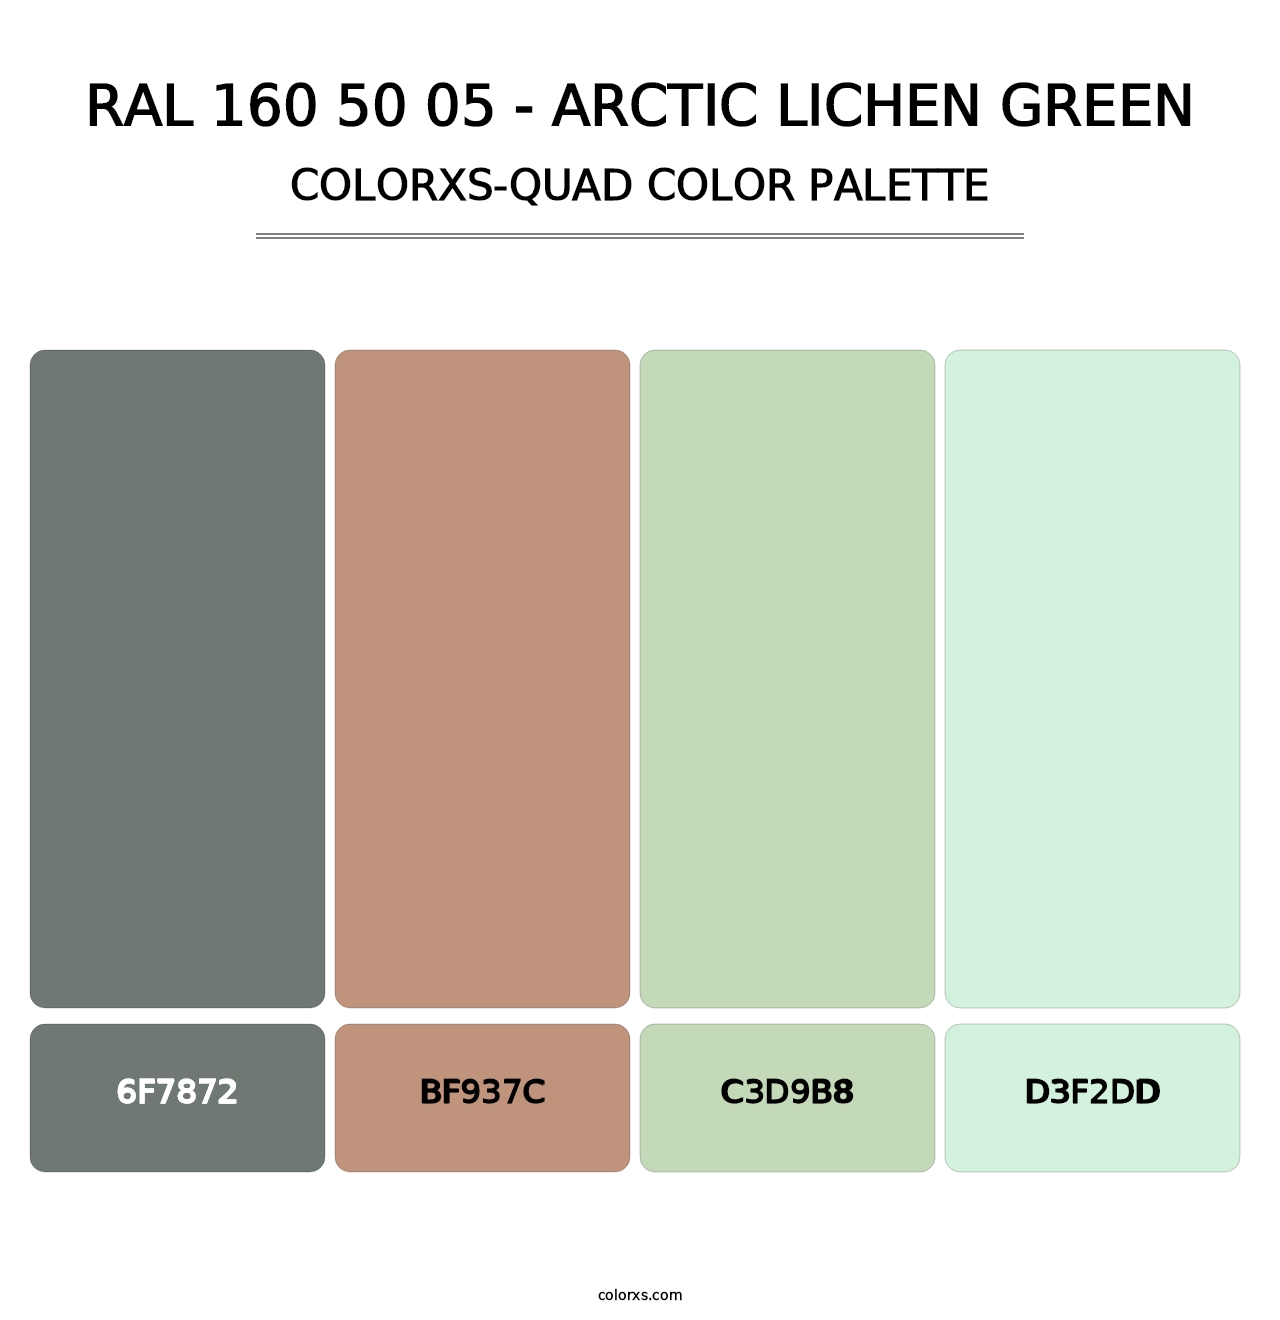 RAL 160 50 05 - Arctic Lichen Green - Colorxs Quad Palette